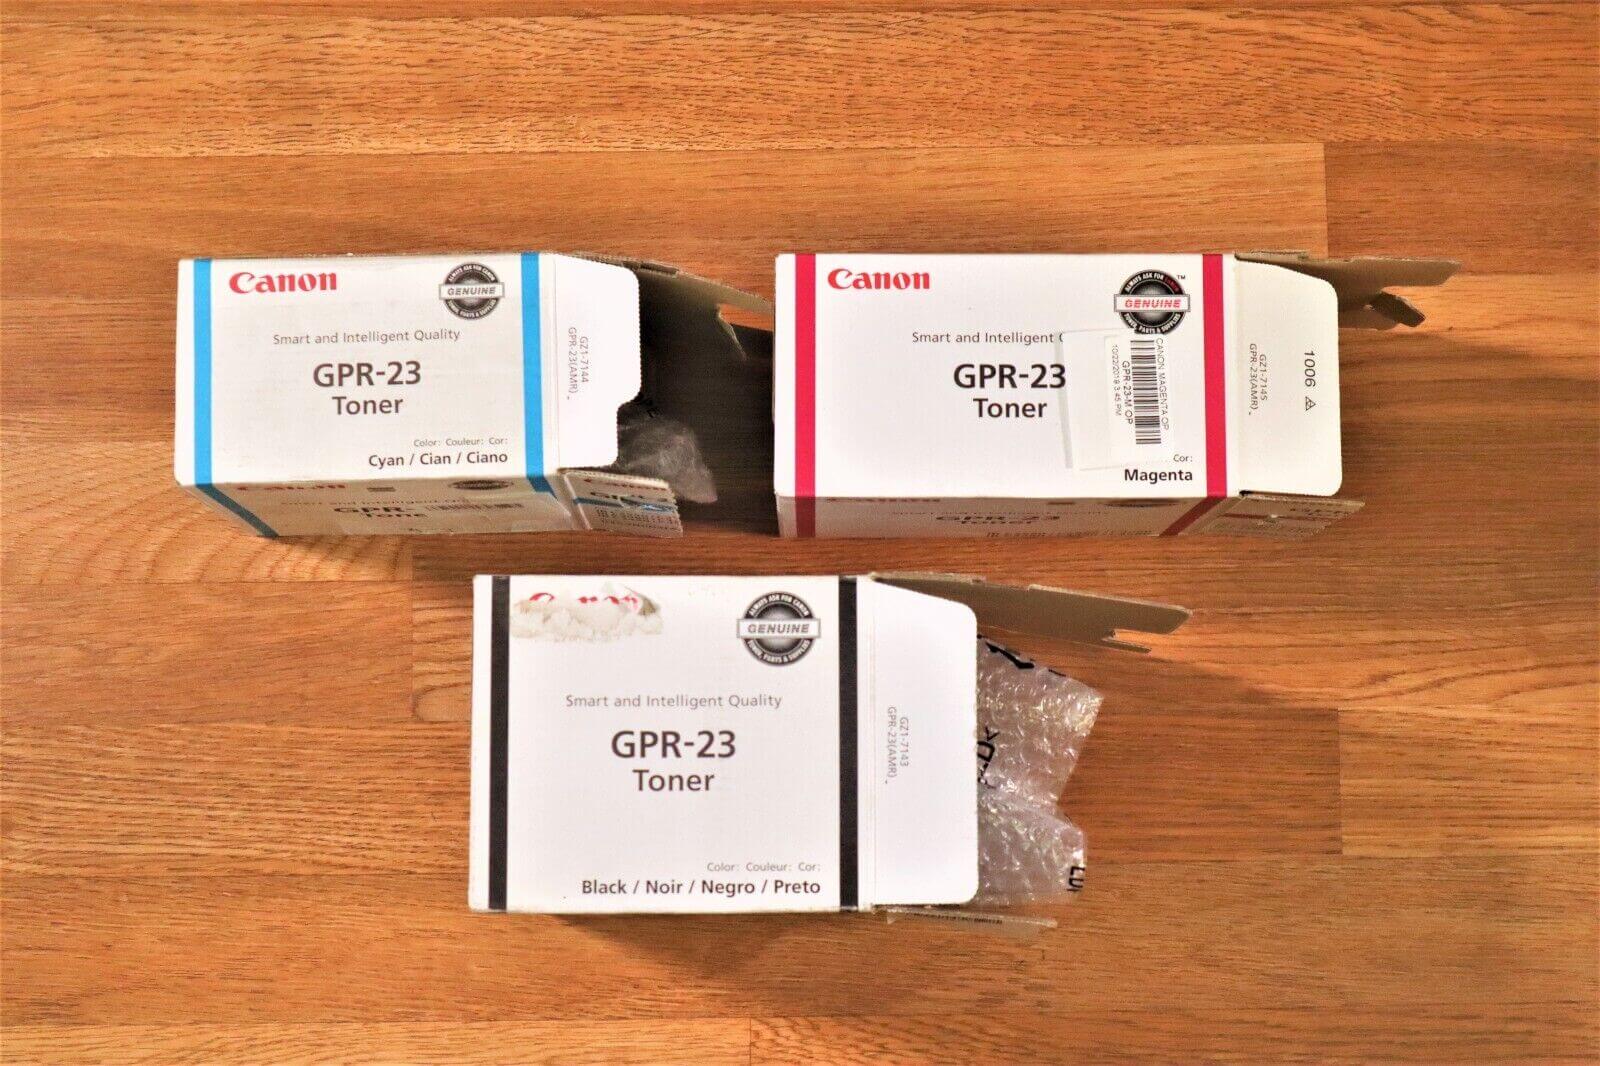 OEM Canon GPR-23 CMK Toner Set For iR C2550 C2880 C3080 C3380 Same Day Shipping! - copier-clearance-center